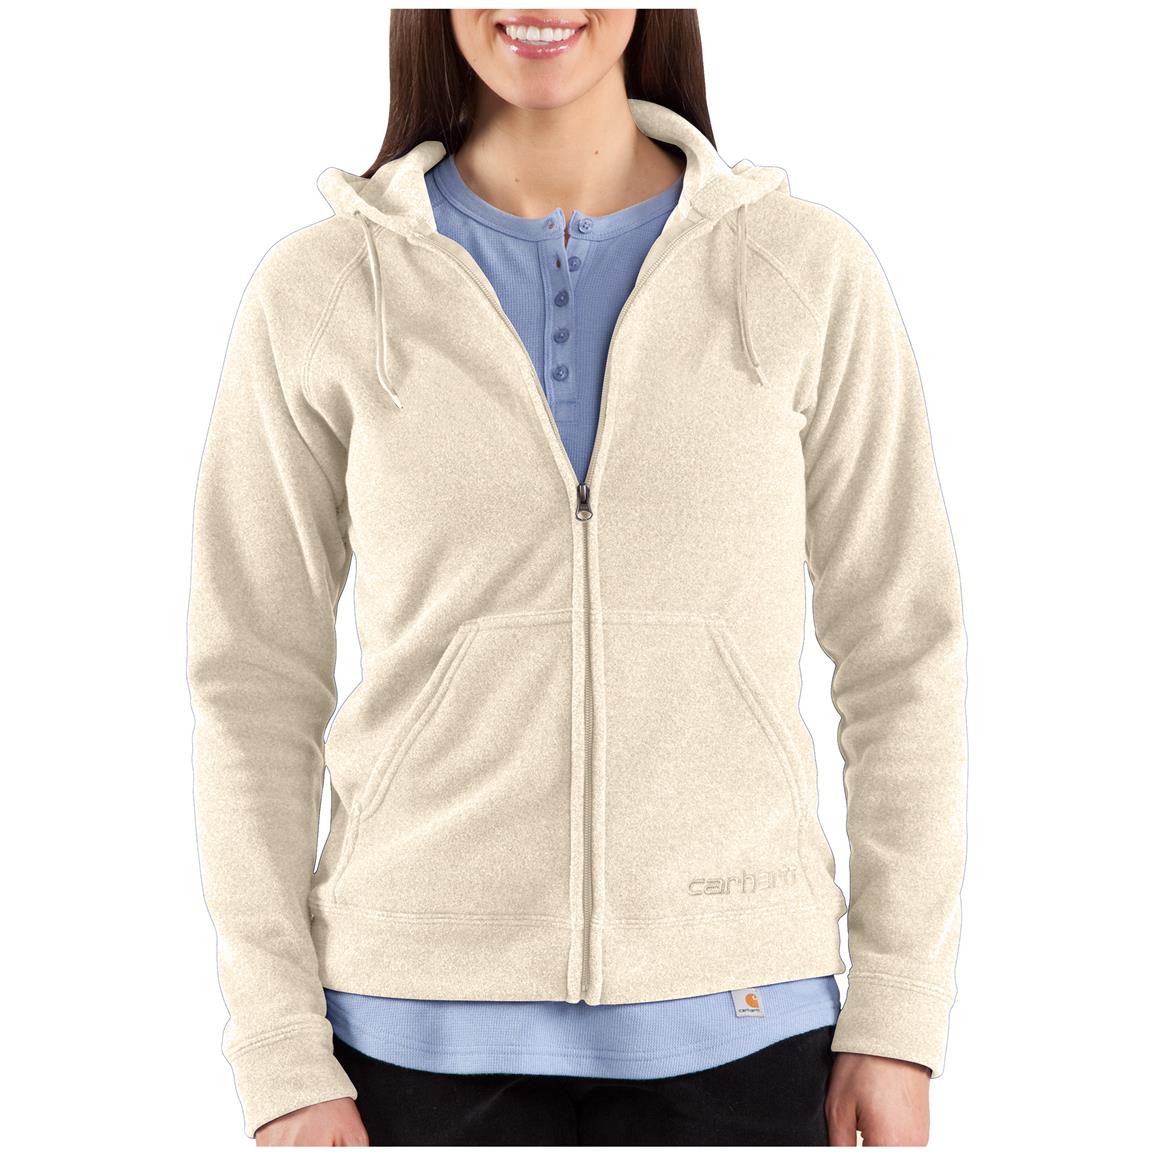 Carhartt Womens Boyne Jacket Hooded Zip-Front Fleece XS 100052 In Stock $65